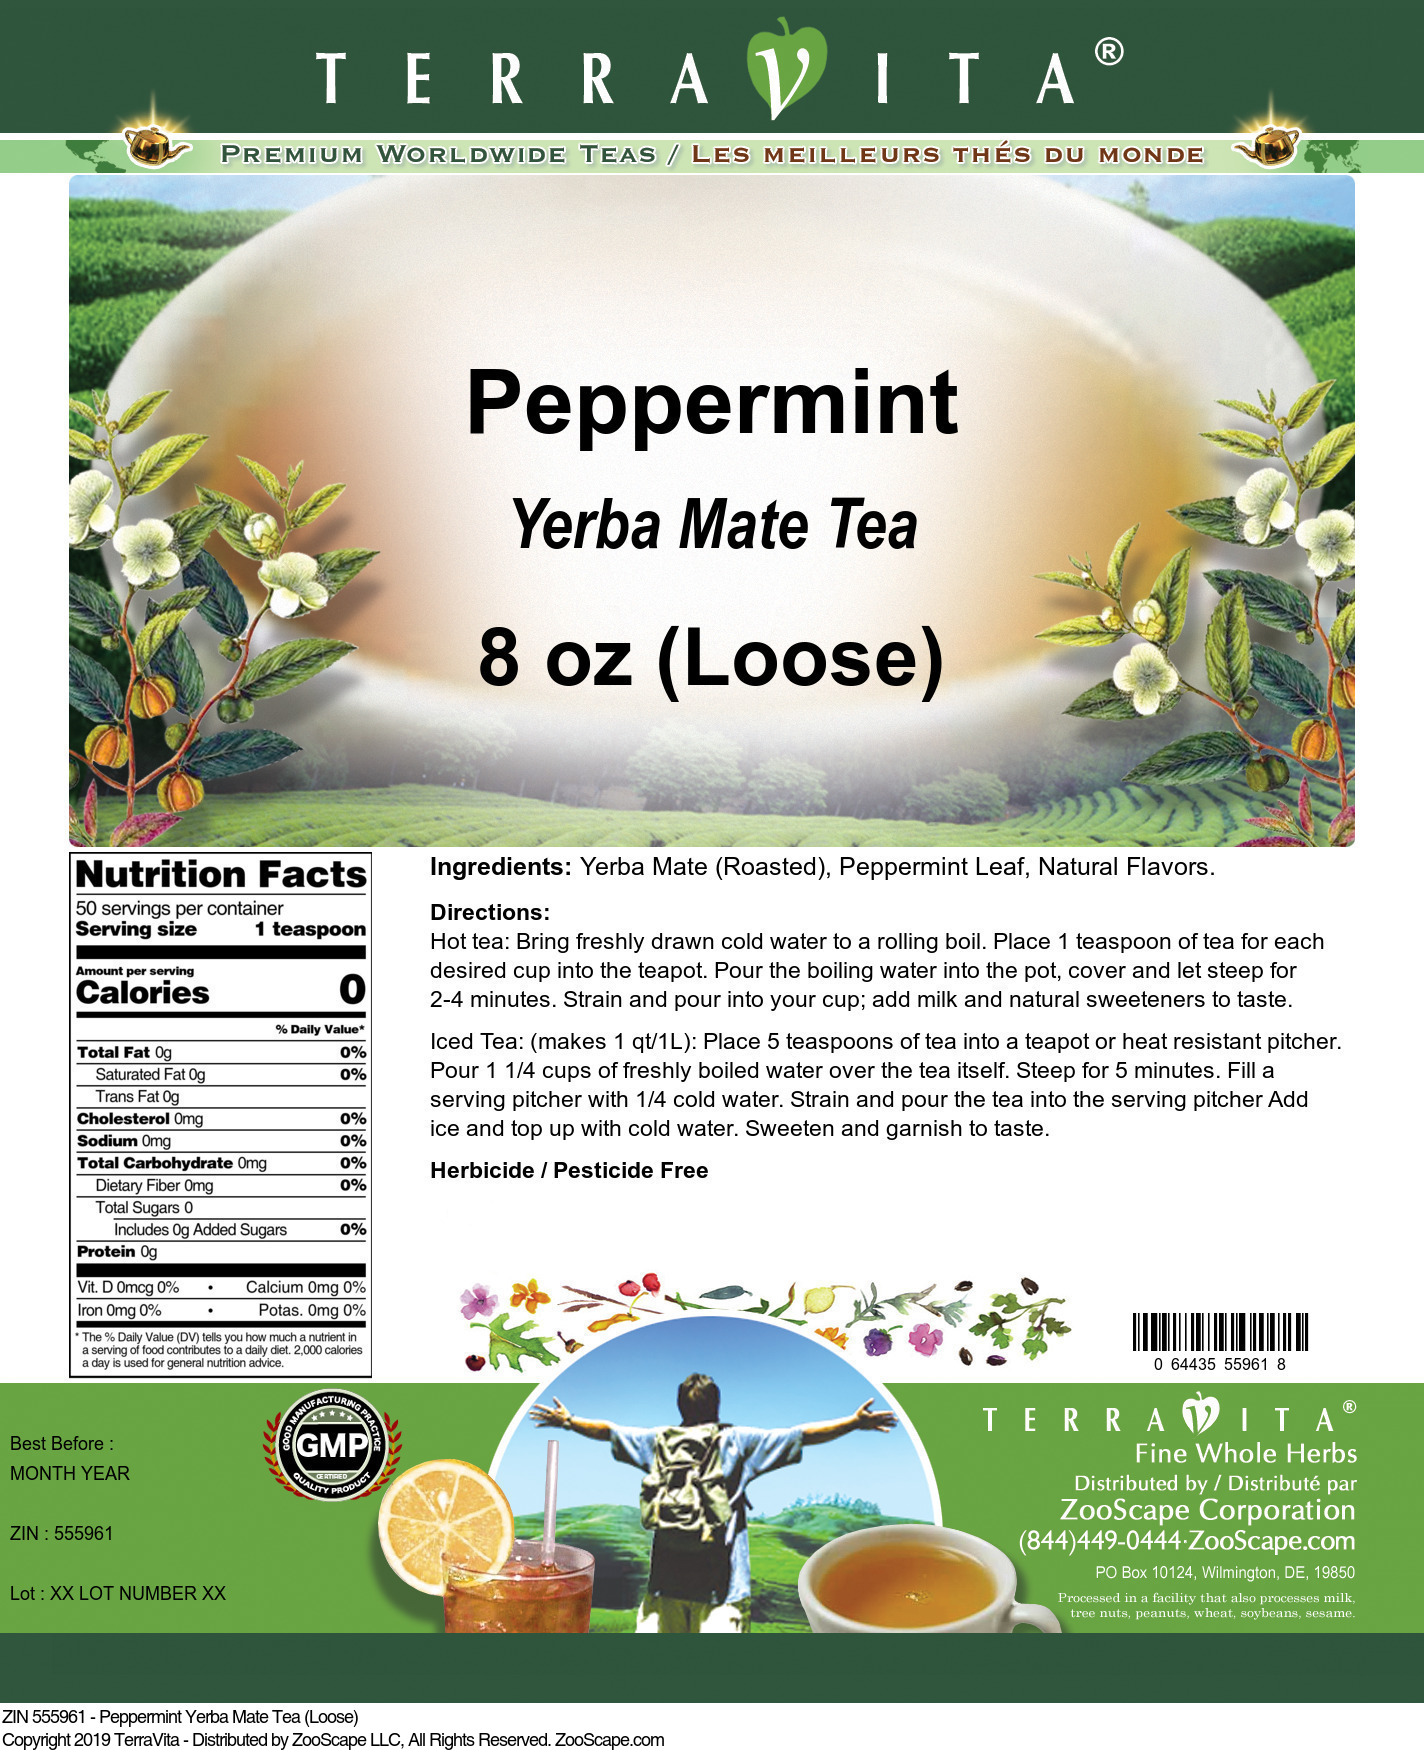 Peppermint Yerba Mate Tea (Loose) - Label